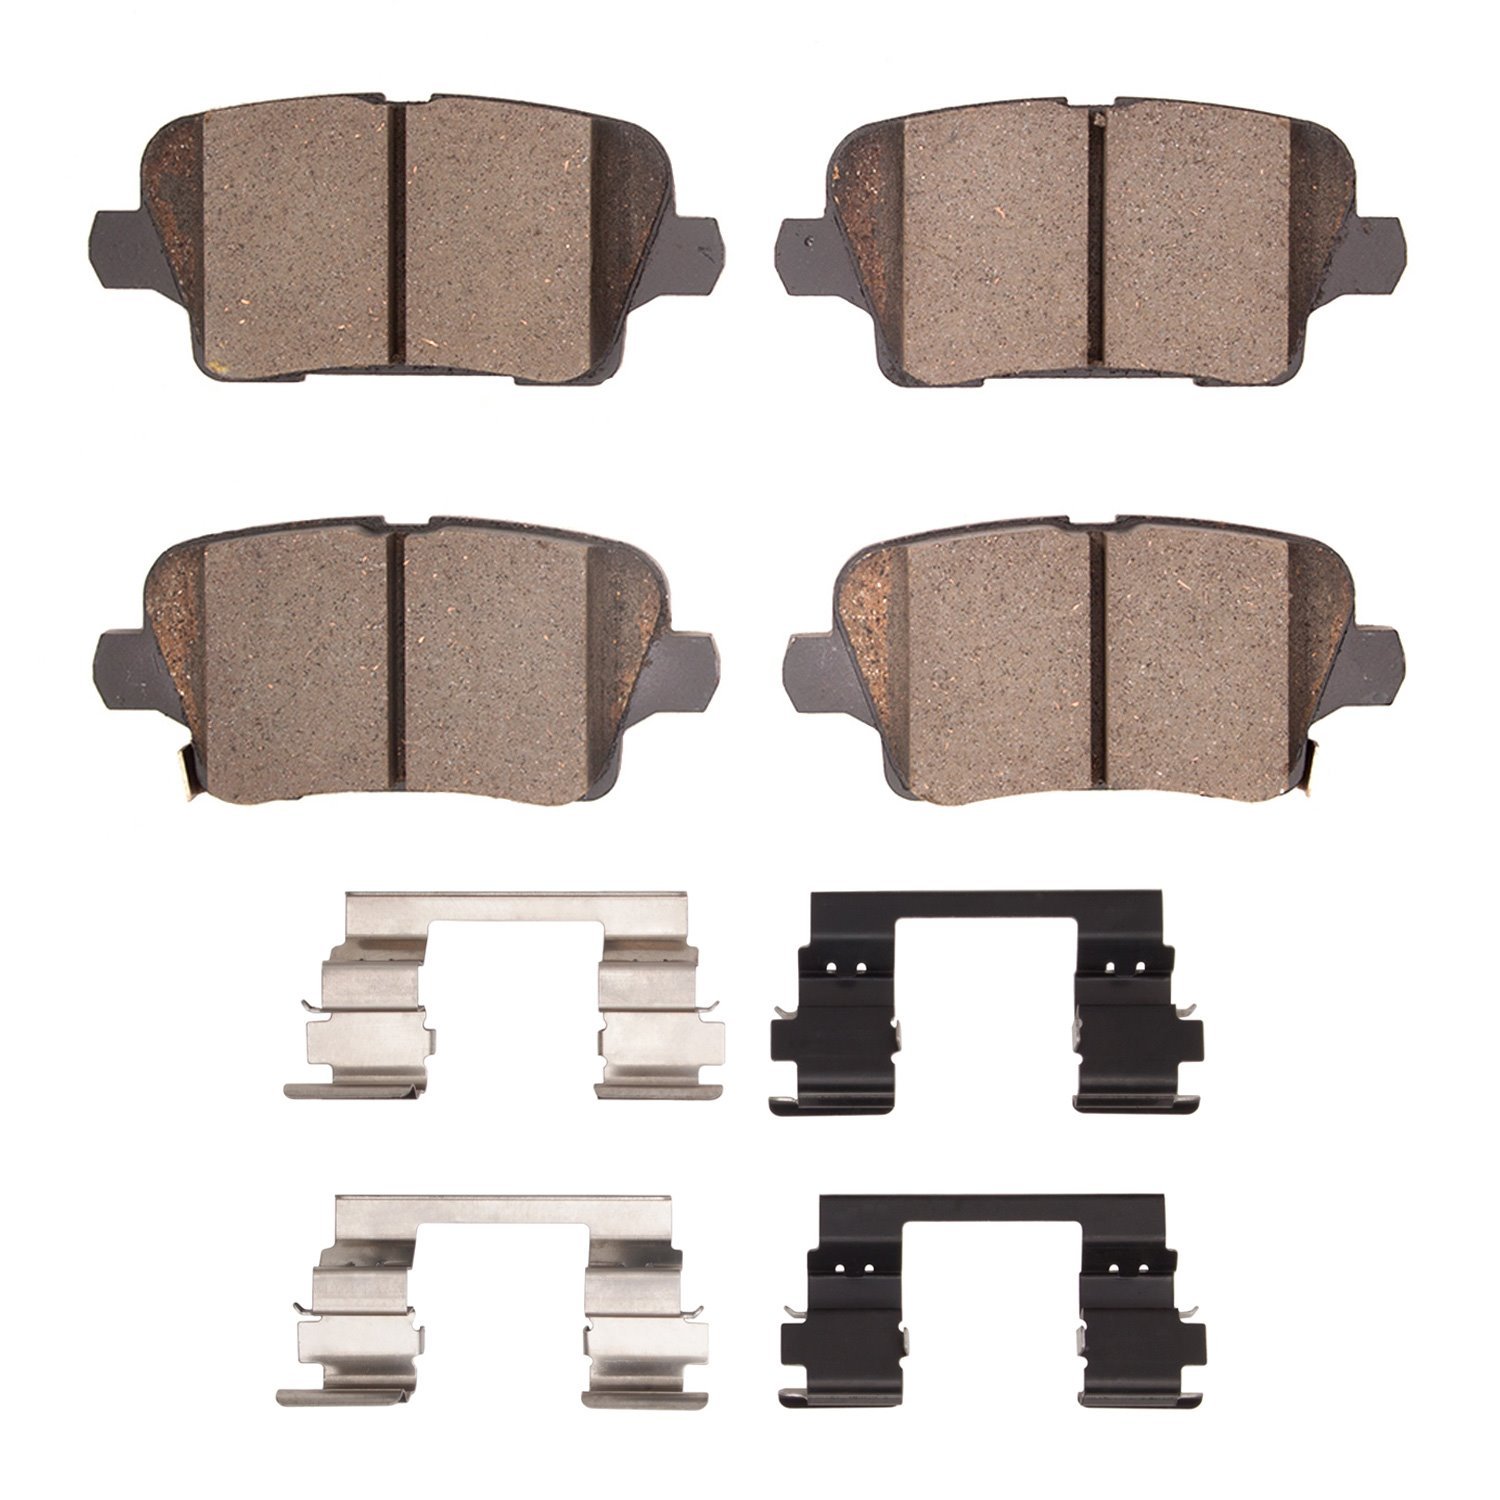 1310-2189-01 3000-Series Ceramic Brake Pads & Hardware Kit, Fits Select GM, Position: Rear